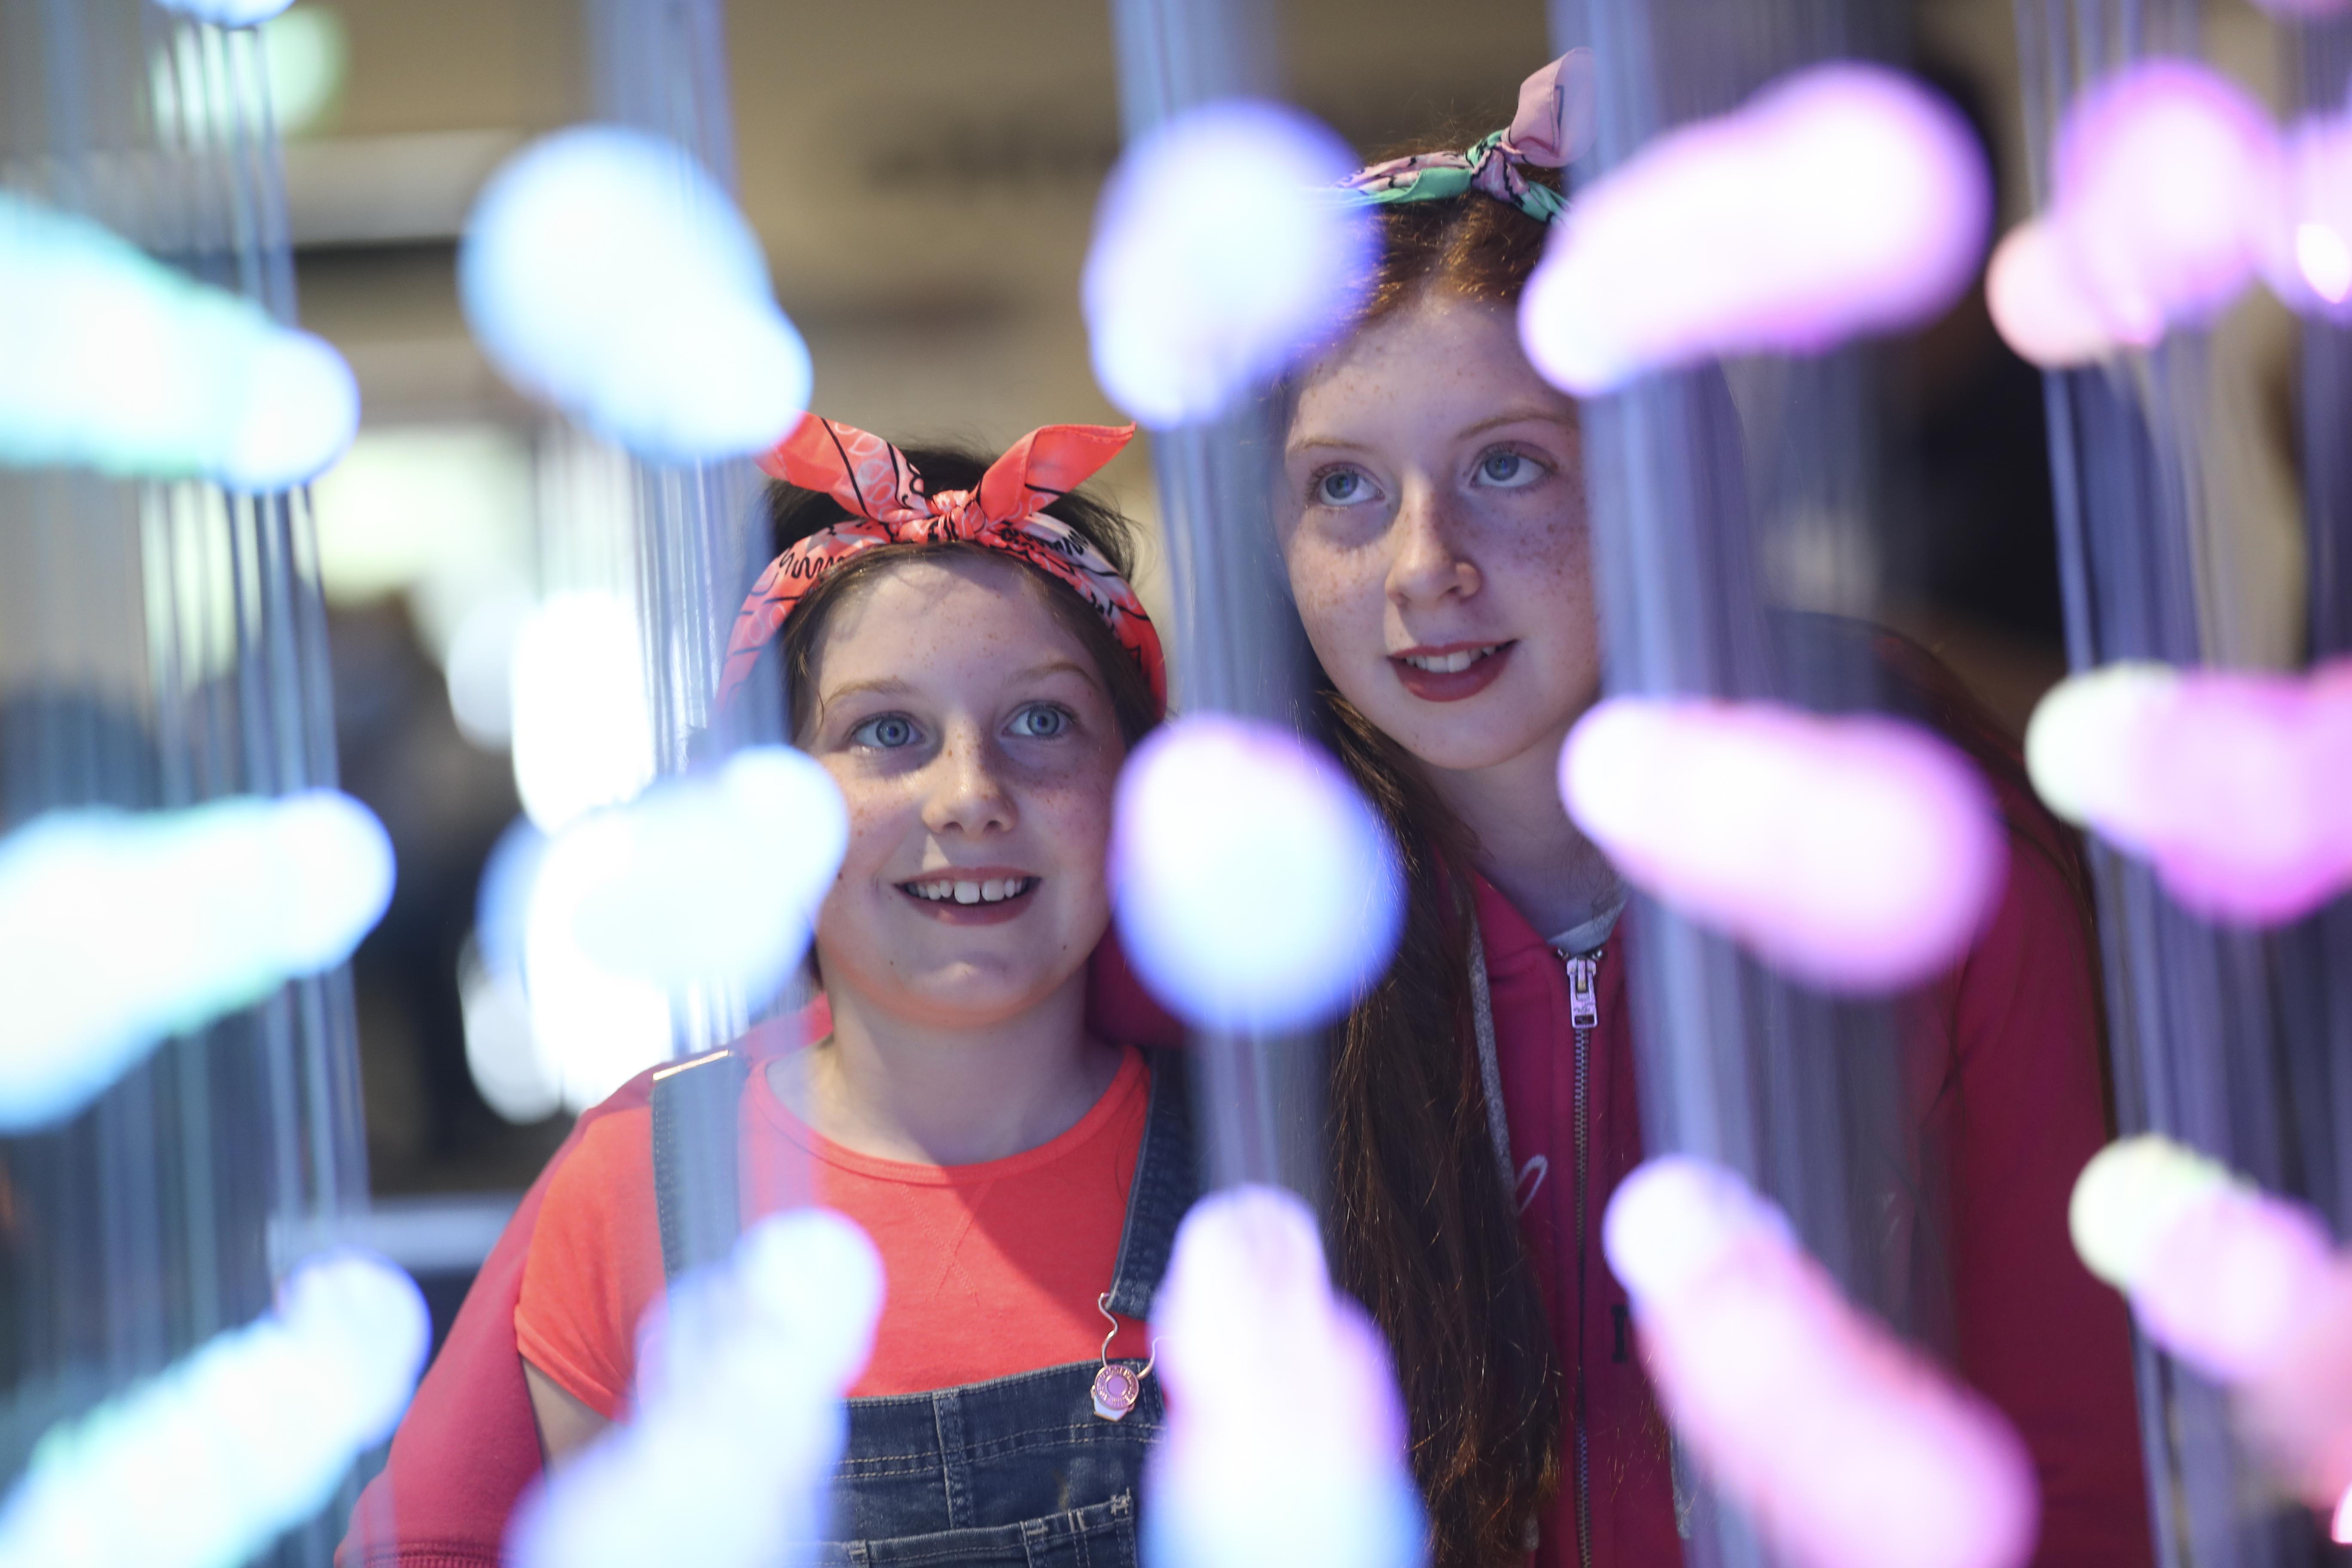 Two smiling girls observe a colourful LED arrangement